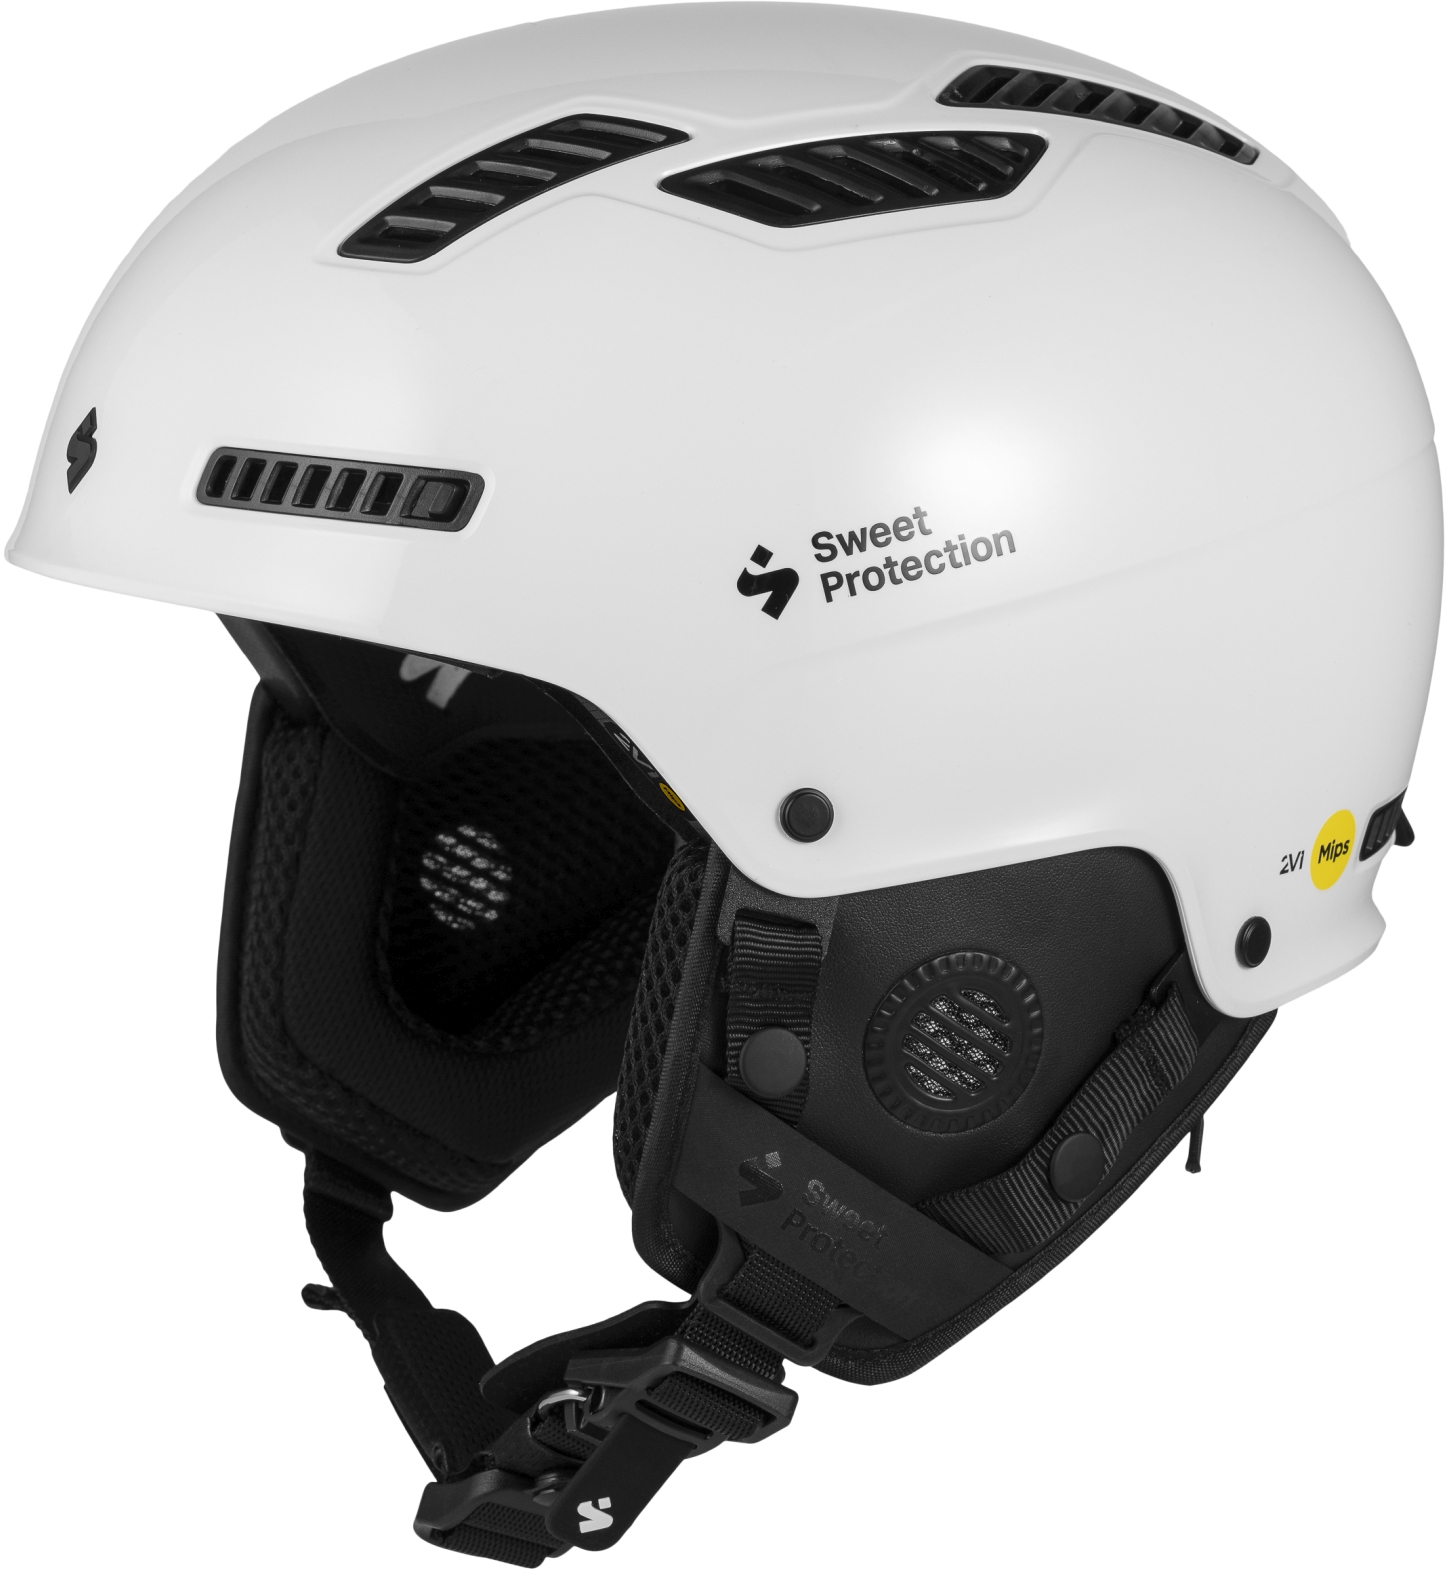 E-shop Sweet Protection Igniter 2Vi MIPS Helmet - Gloss White 56-59